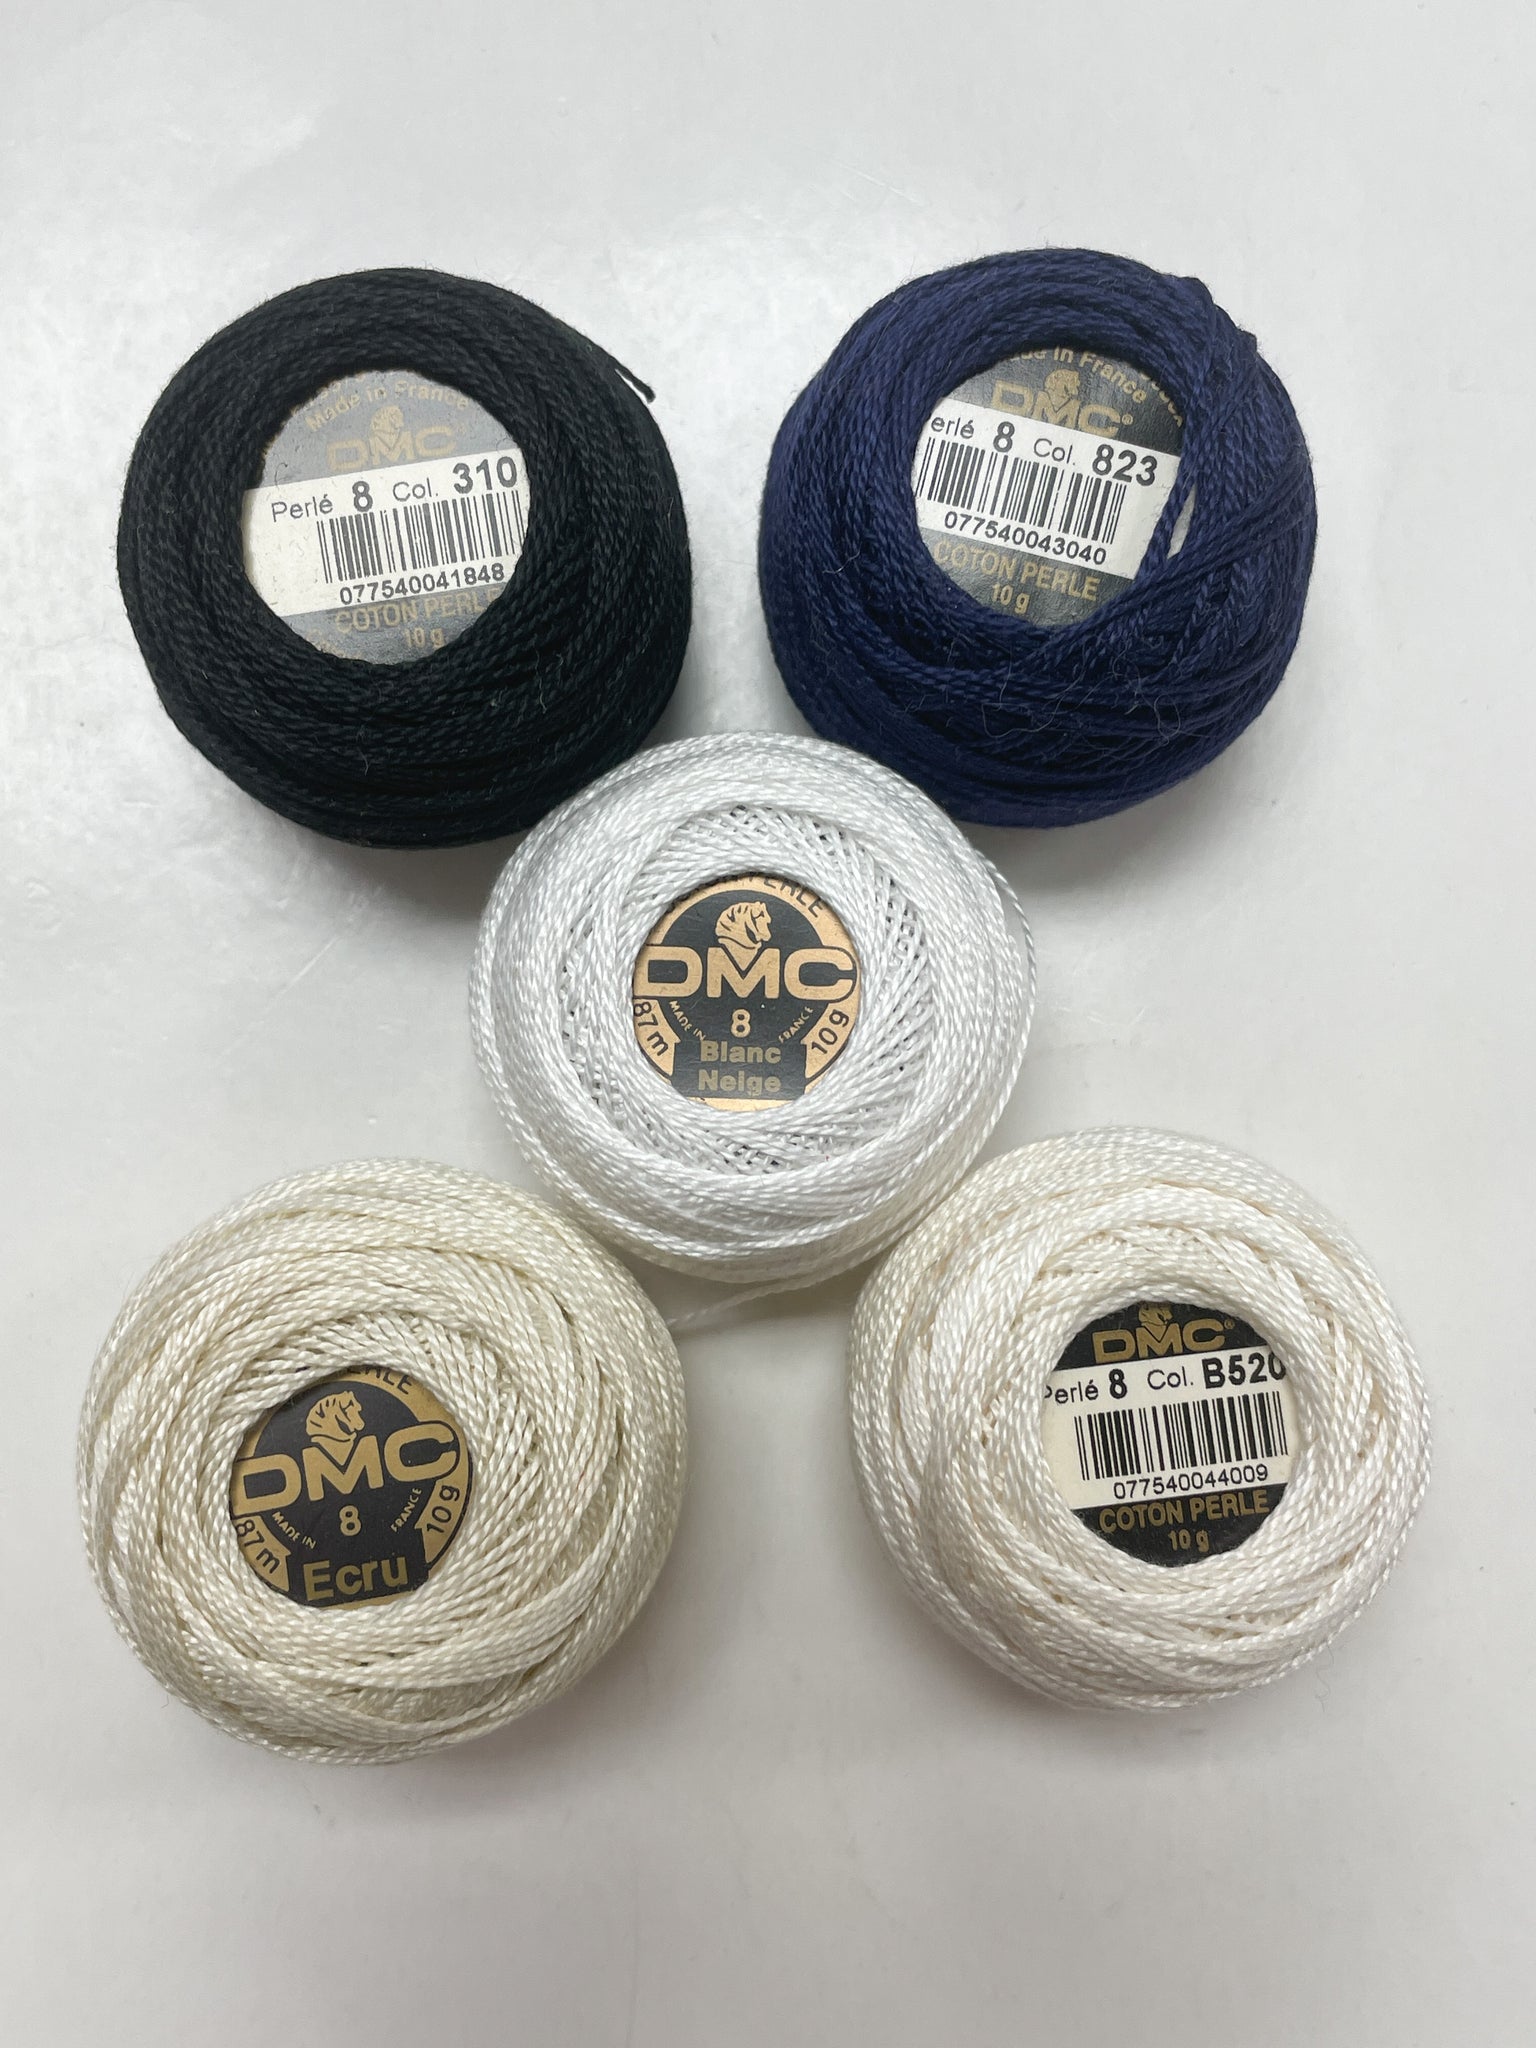 Cotton Pearl Bundle Size 8 - Whites, Navy Blue and Black